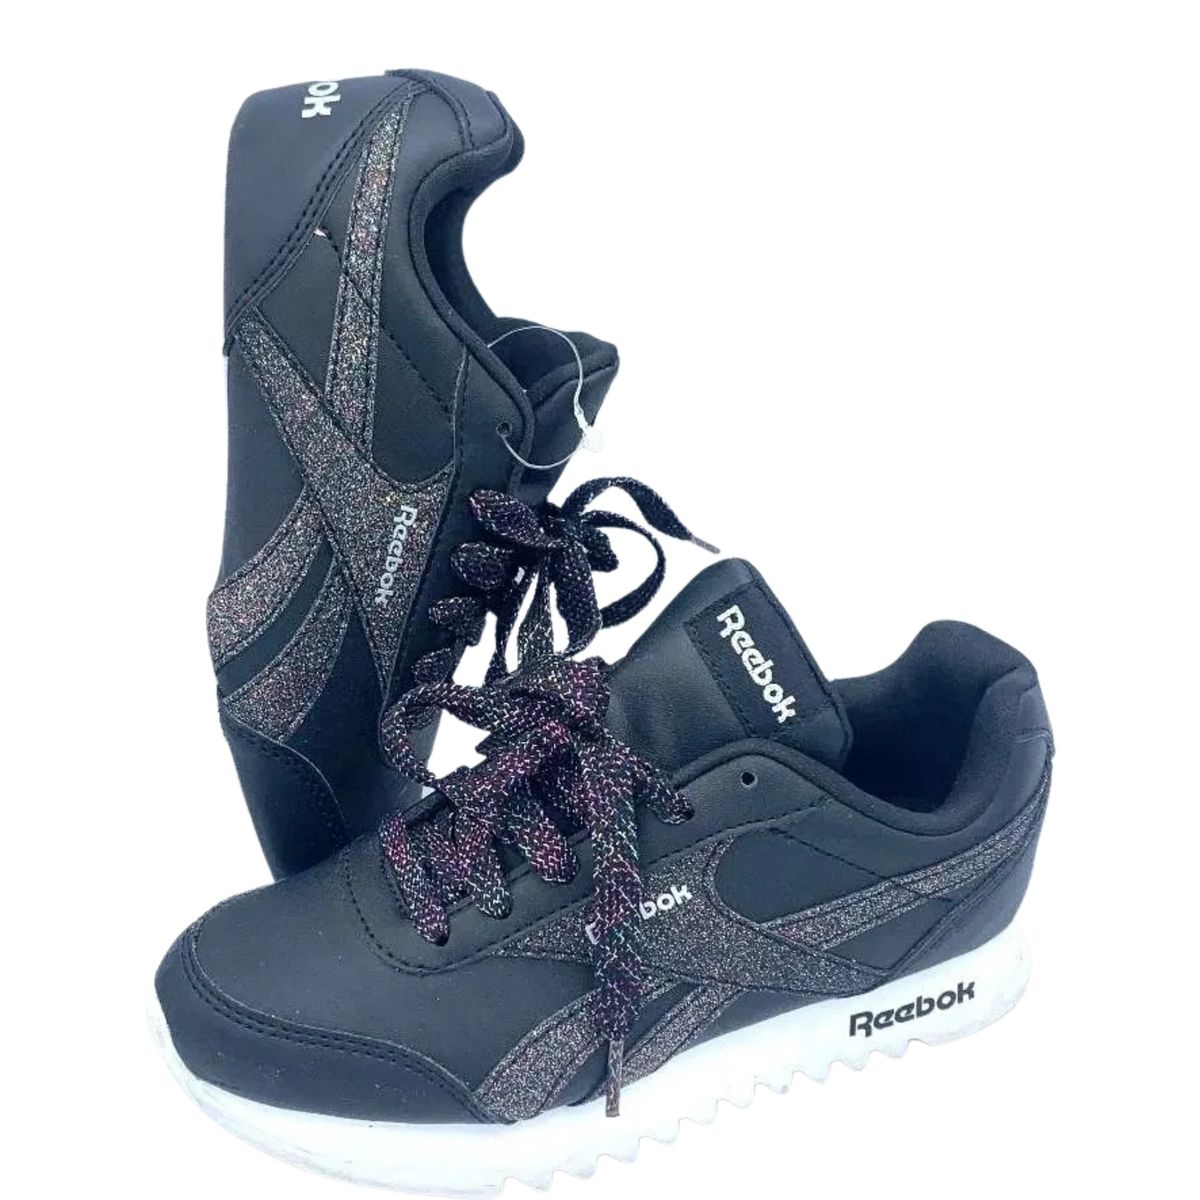 Reebok Child Platform Classic Jogger 2.0 Sneaker size 1.5